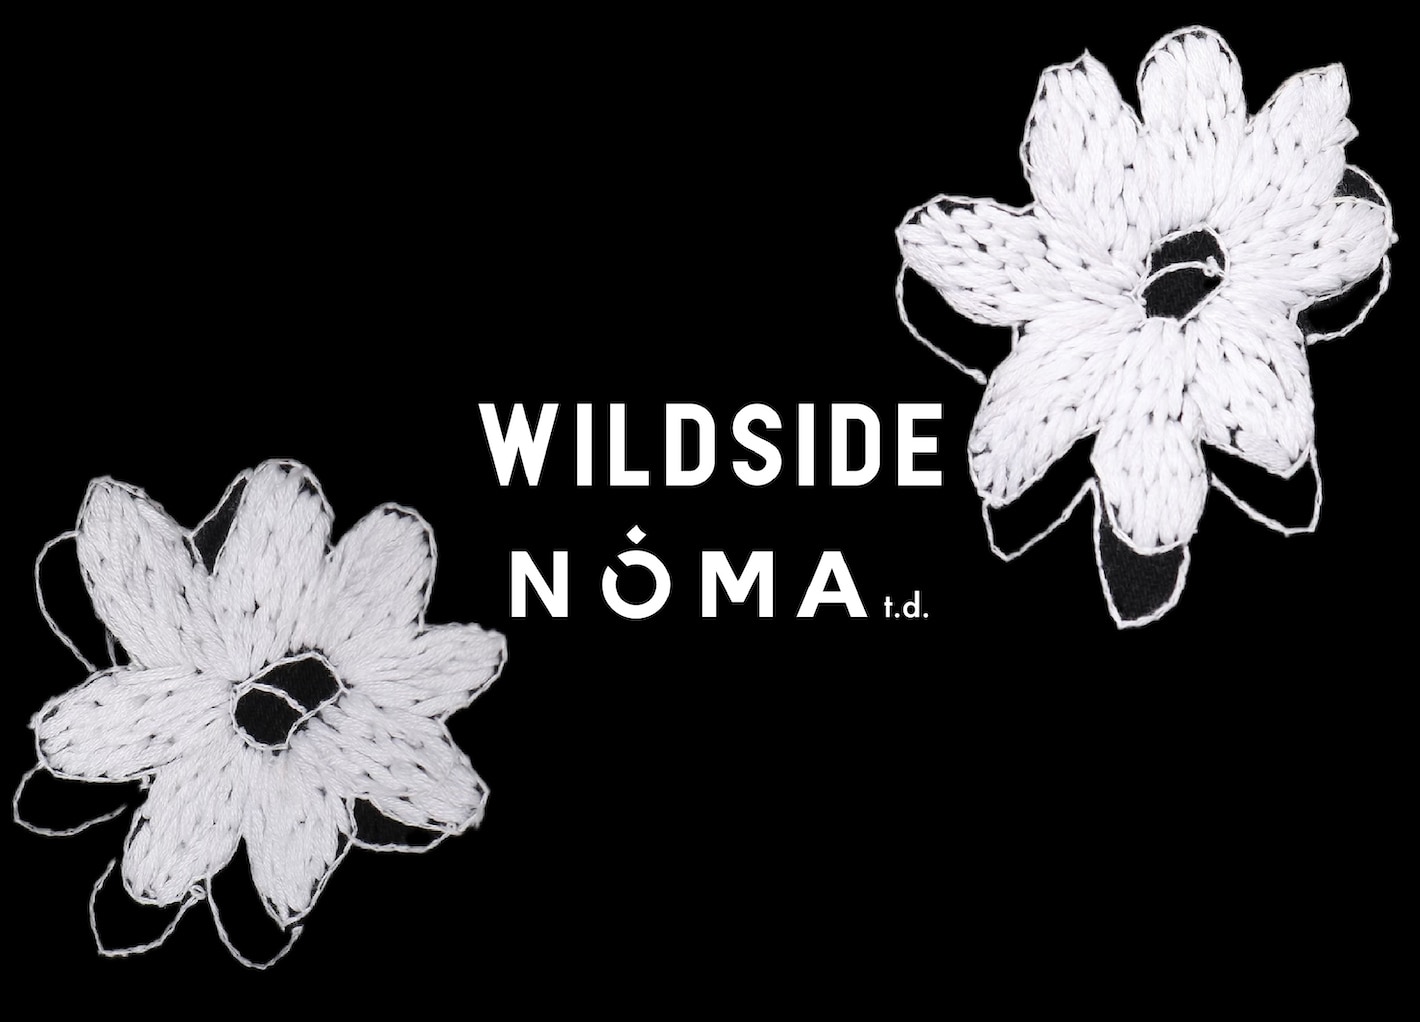 WILDSIDE YOHJI YAMAMOTO × NOMA t.d. <br> Collaboration Collection